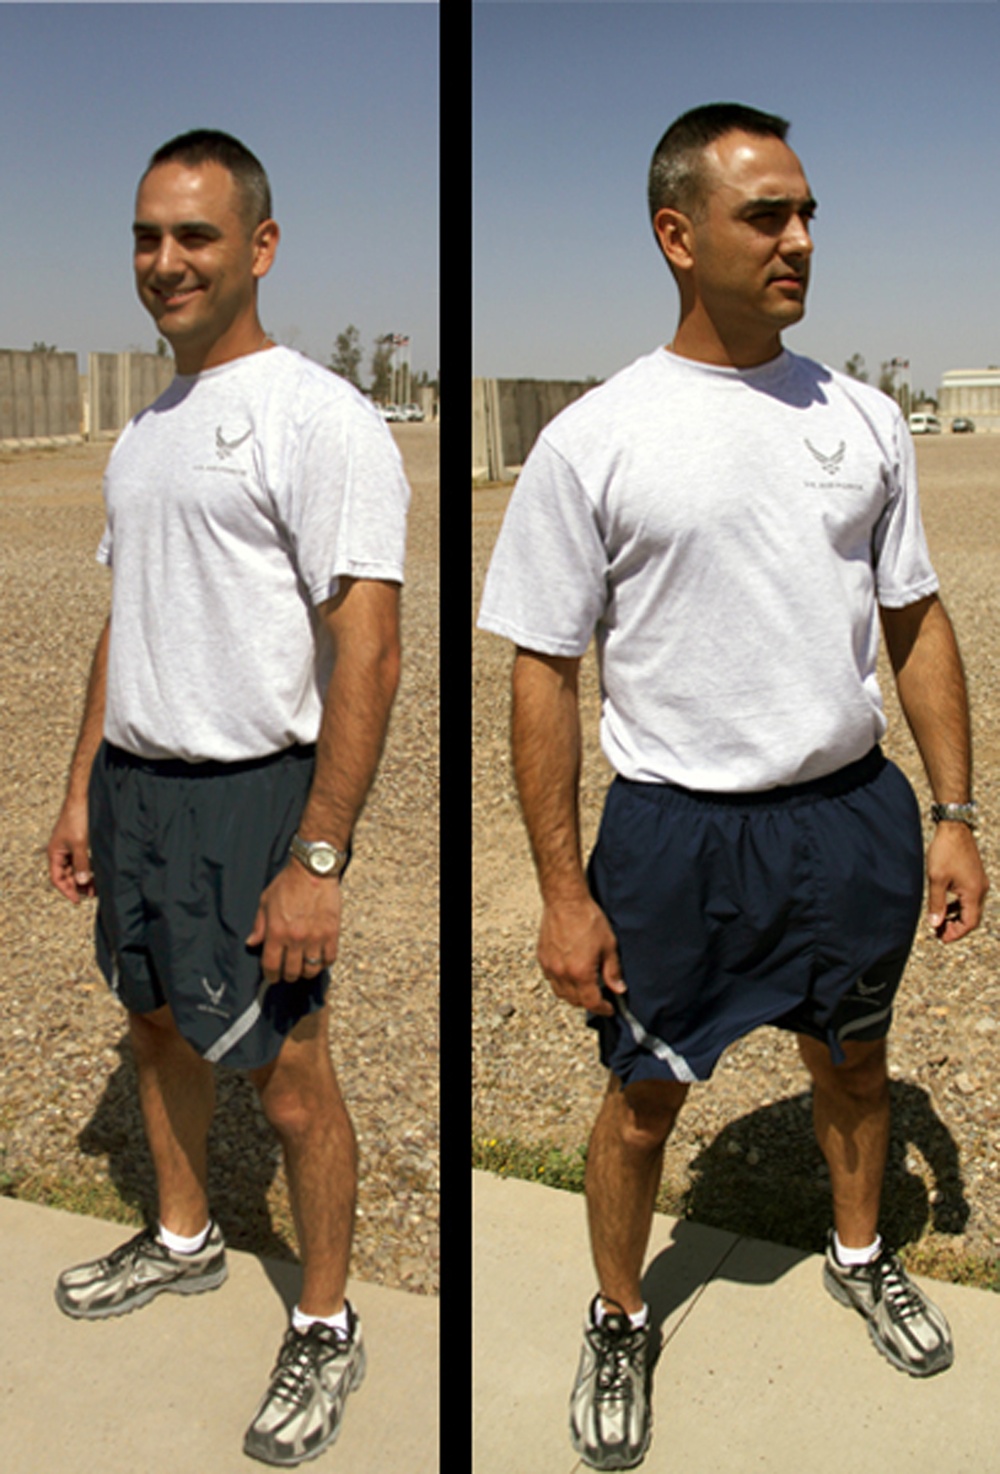 Modified Physical Training Uniform